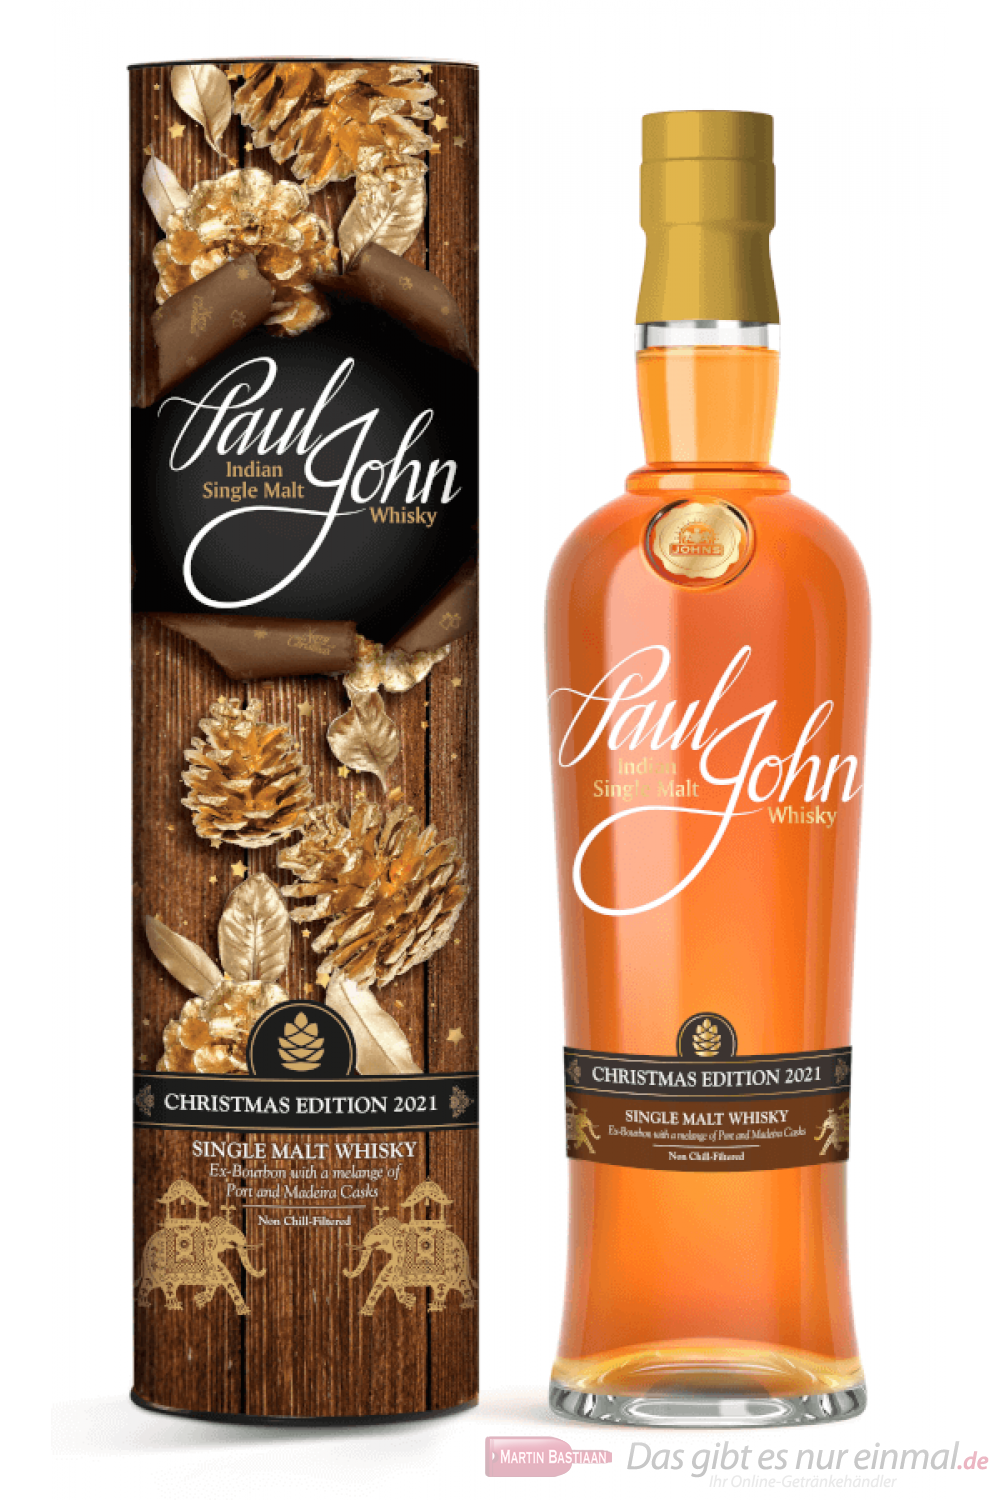 Paul John Chrismas Edition 2021 Indischer Single Malt Whisky 0,7l 